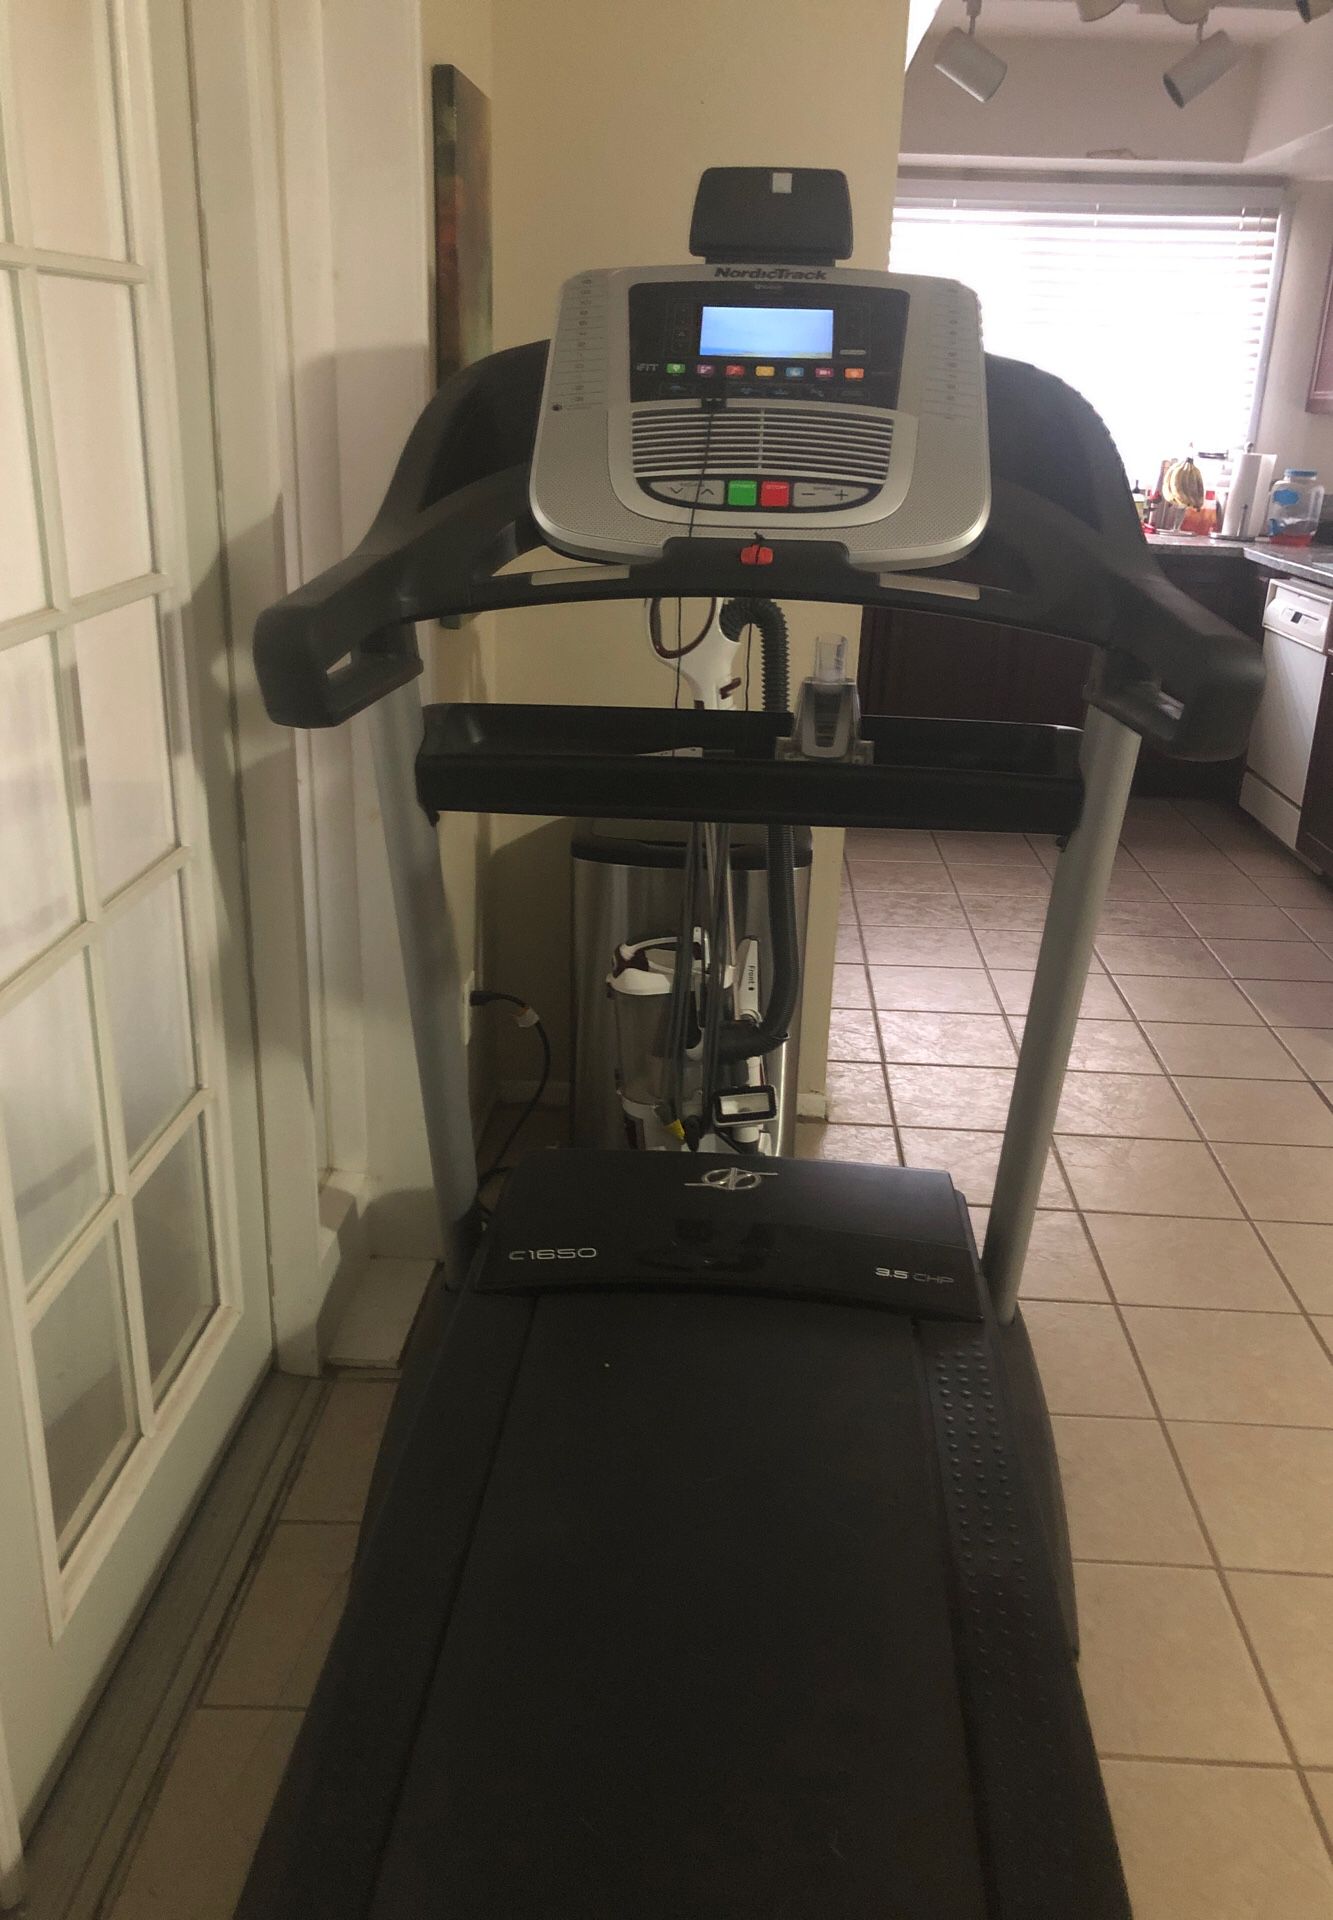 NordicTrack C1650 Treadmill